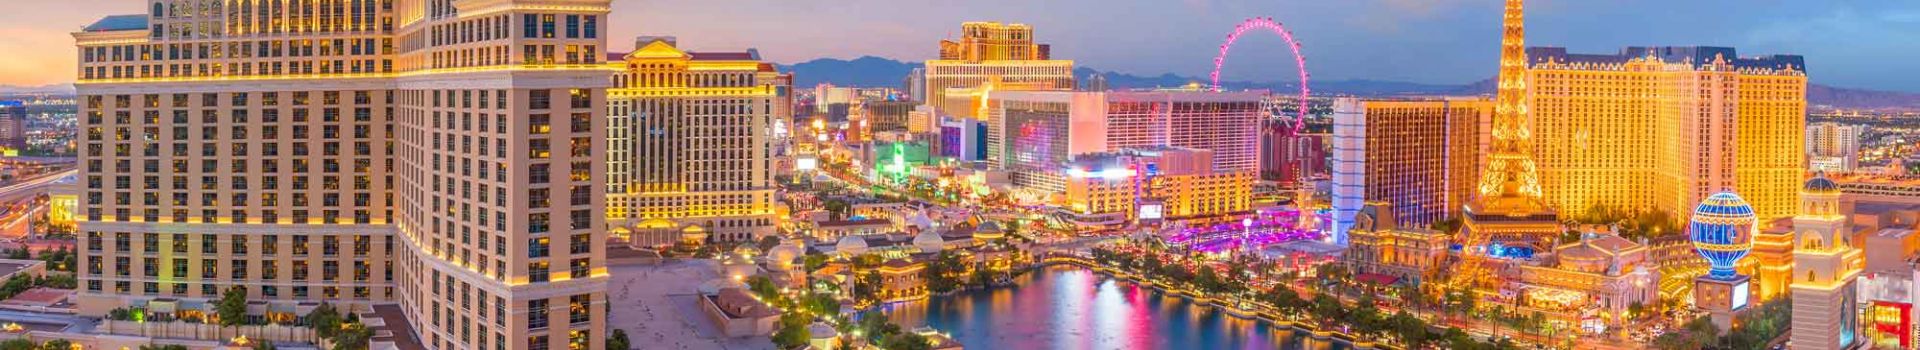 American Holidays to Las Vegas | Book Flights & Hotel | Cassidy Travel